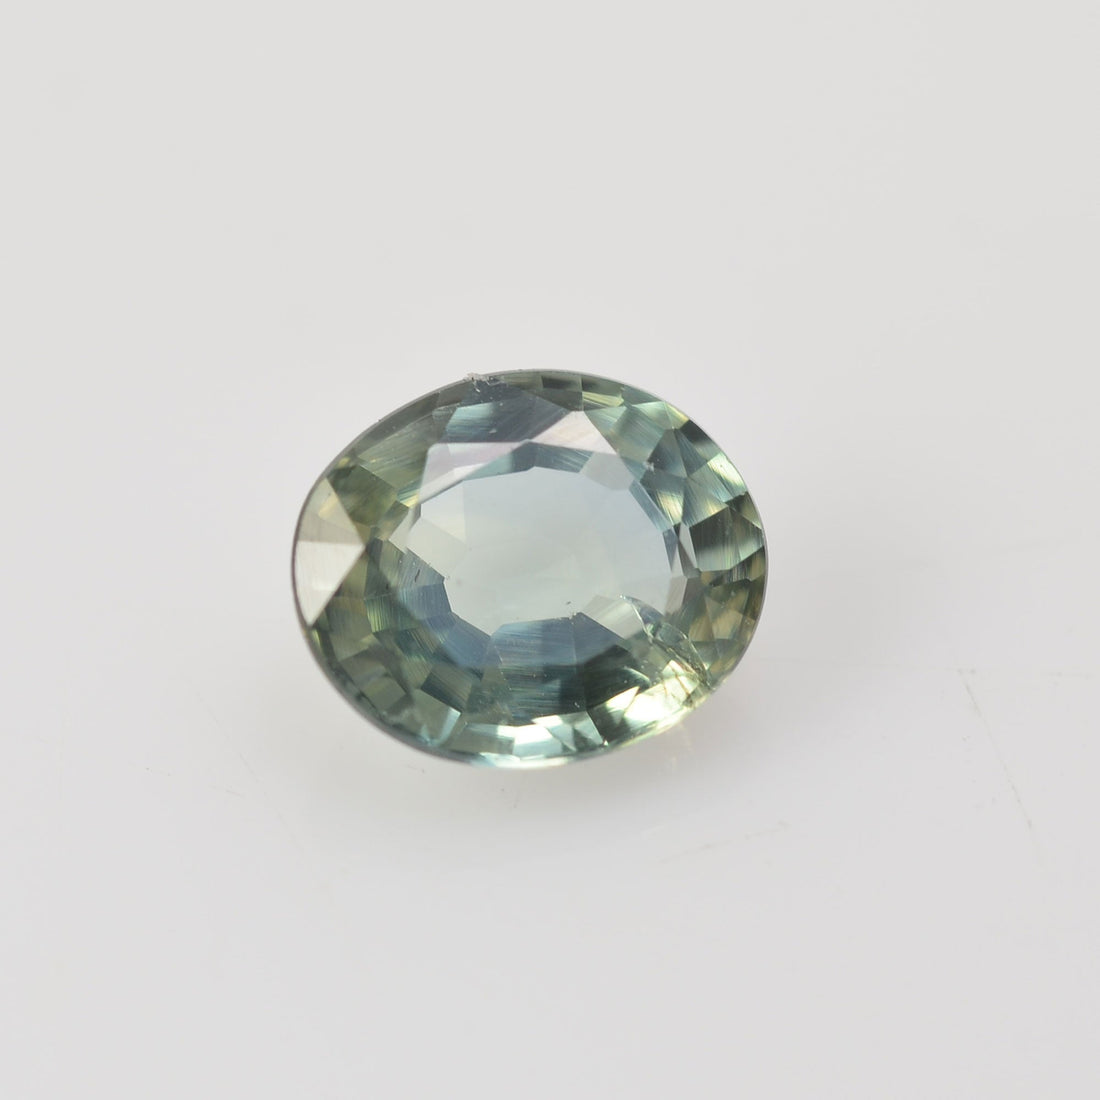 0.72 cts Natural Green Teal Sapphire Loose Gemstone Oval Cut - Thai Gems Export Ltd.